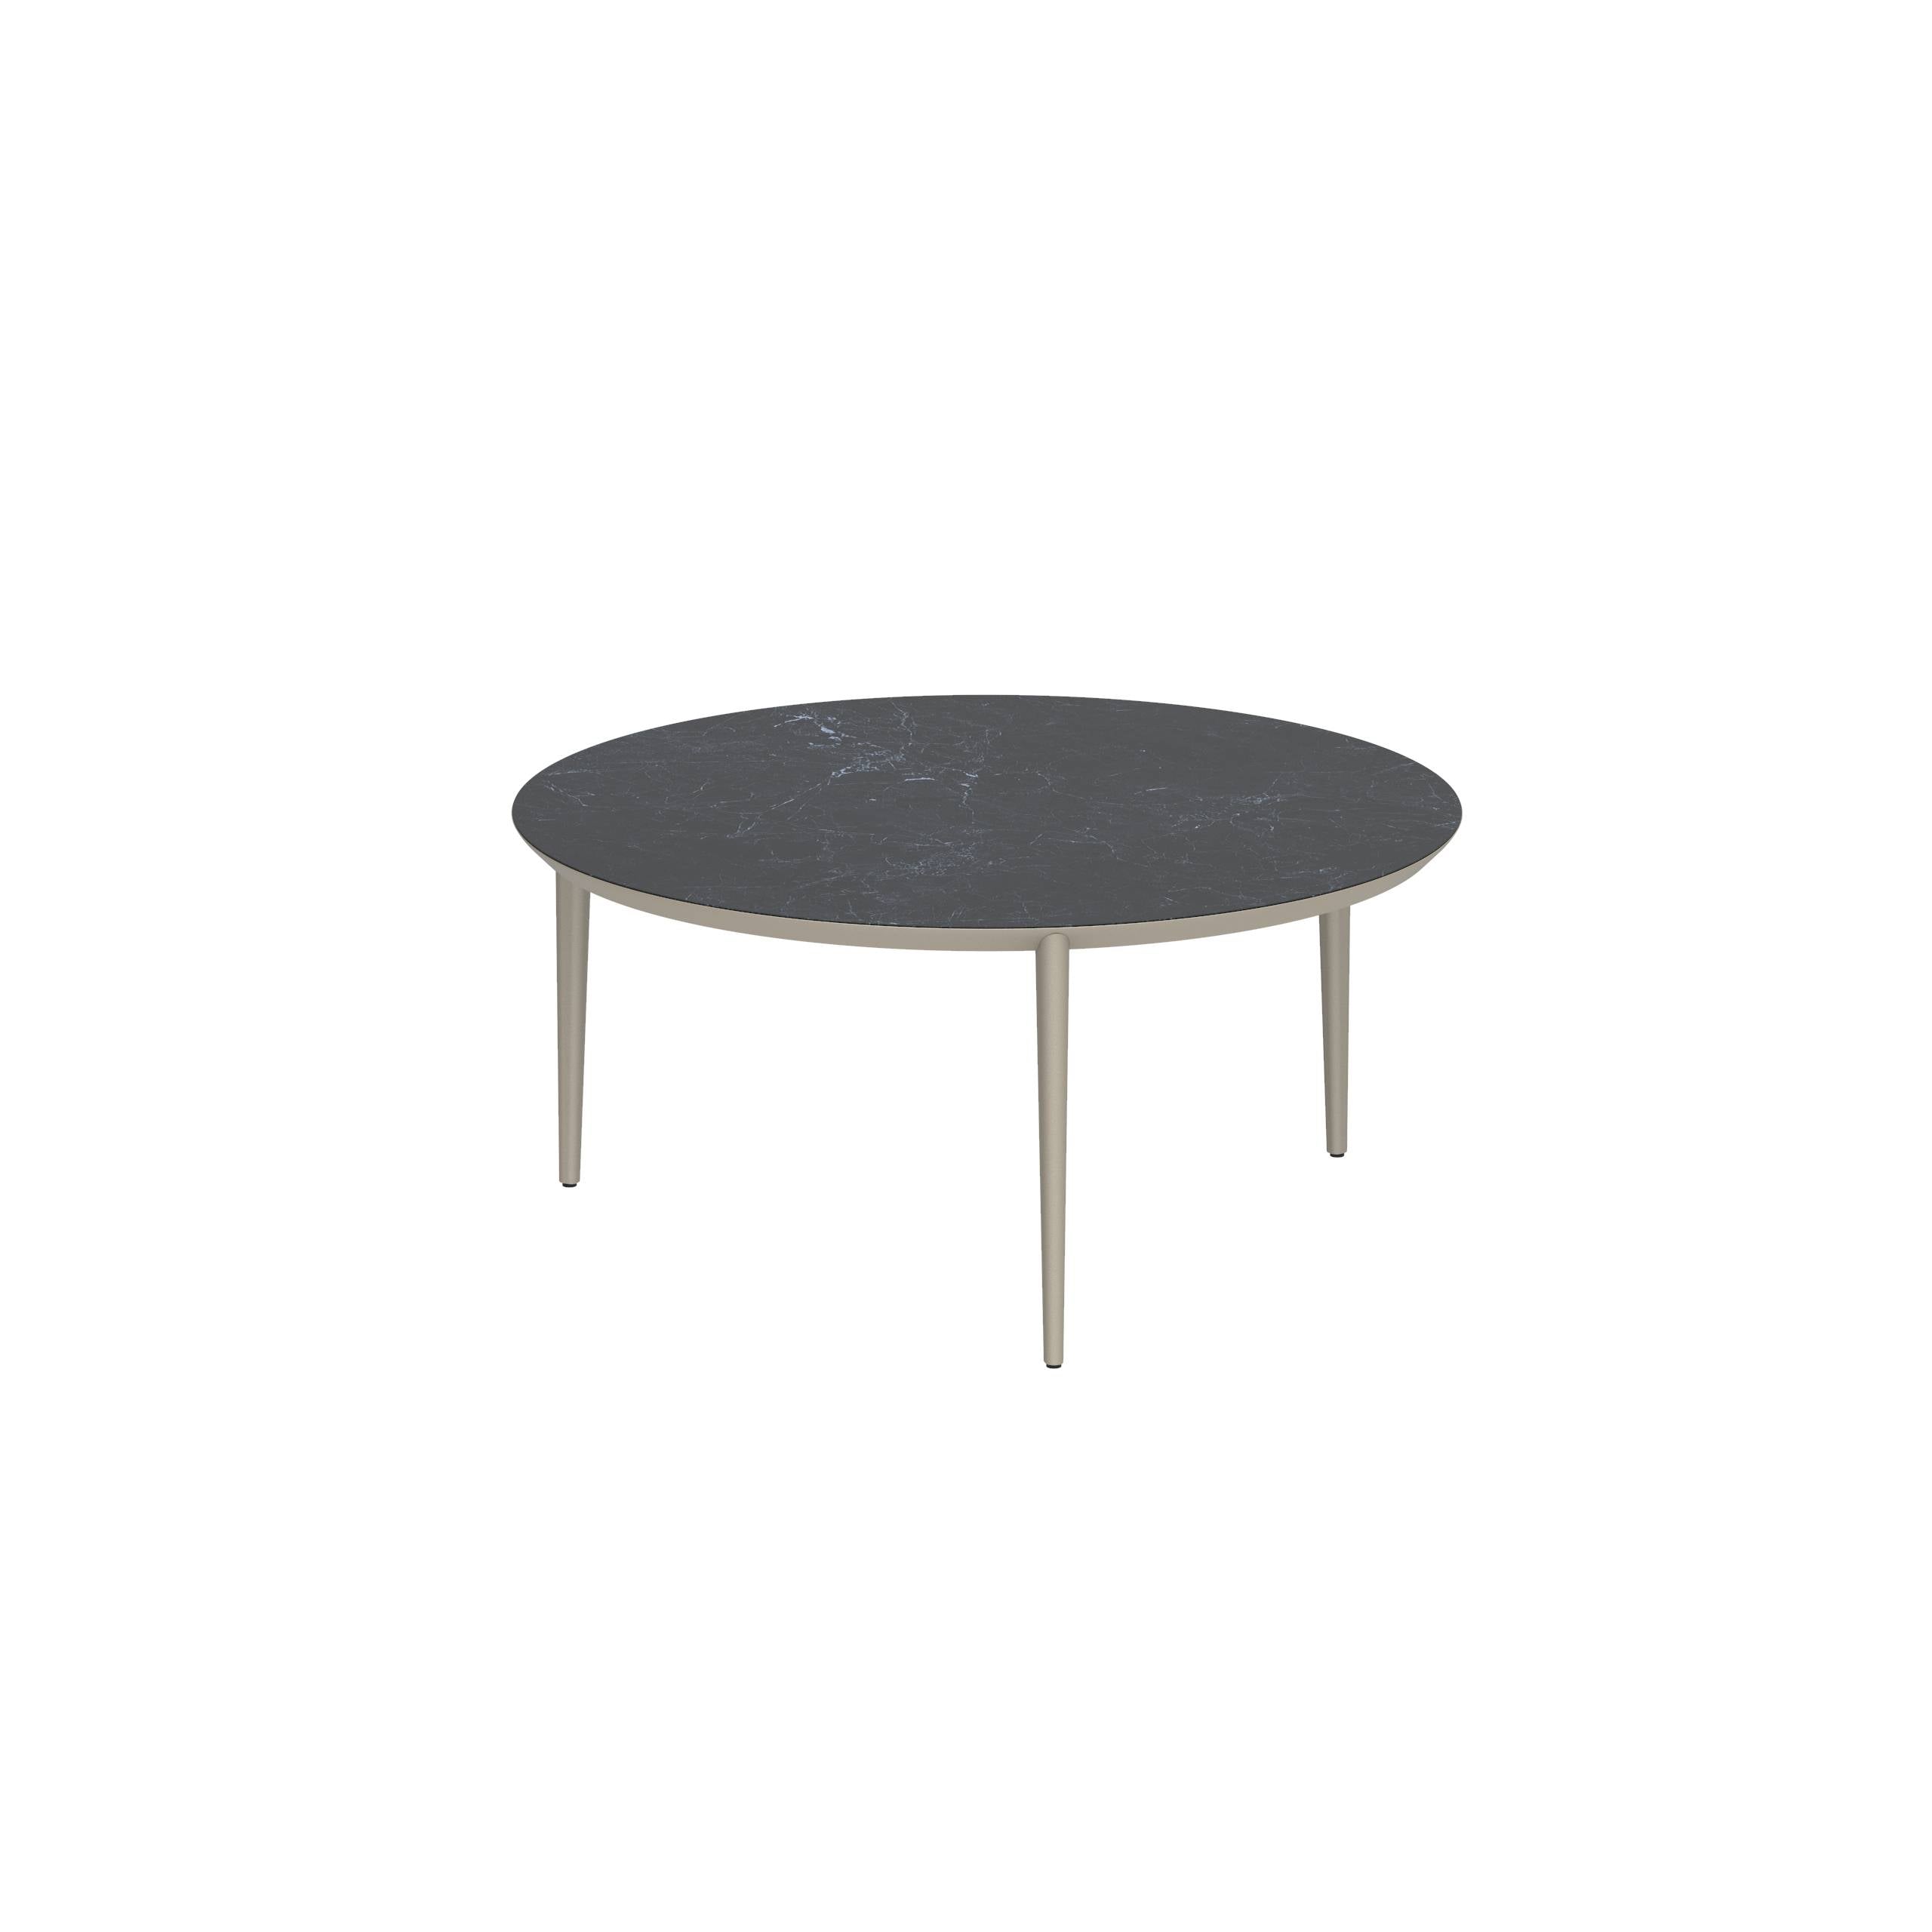 U-Nite Table Round Ø 160cm Alu Legs Sand - Table Top Ceramic Nero Marquina